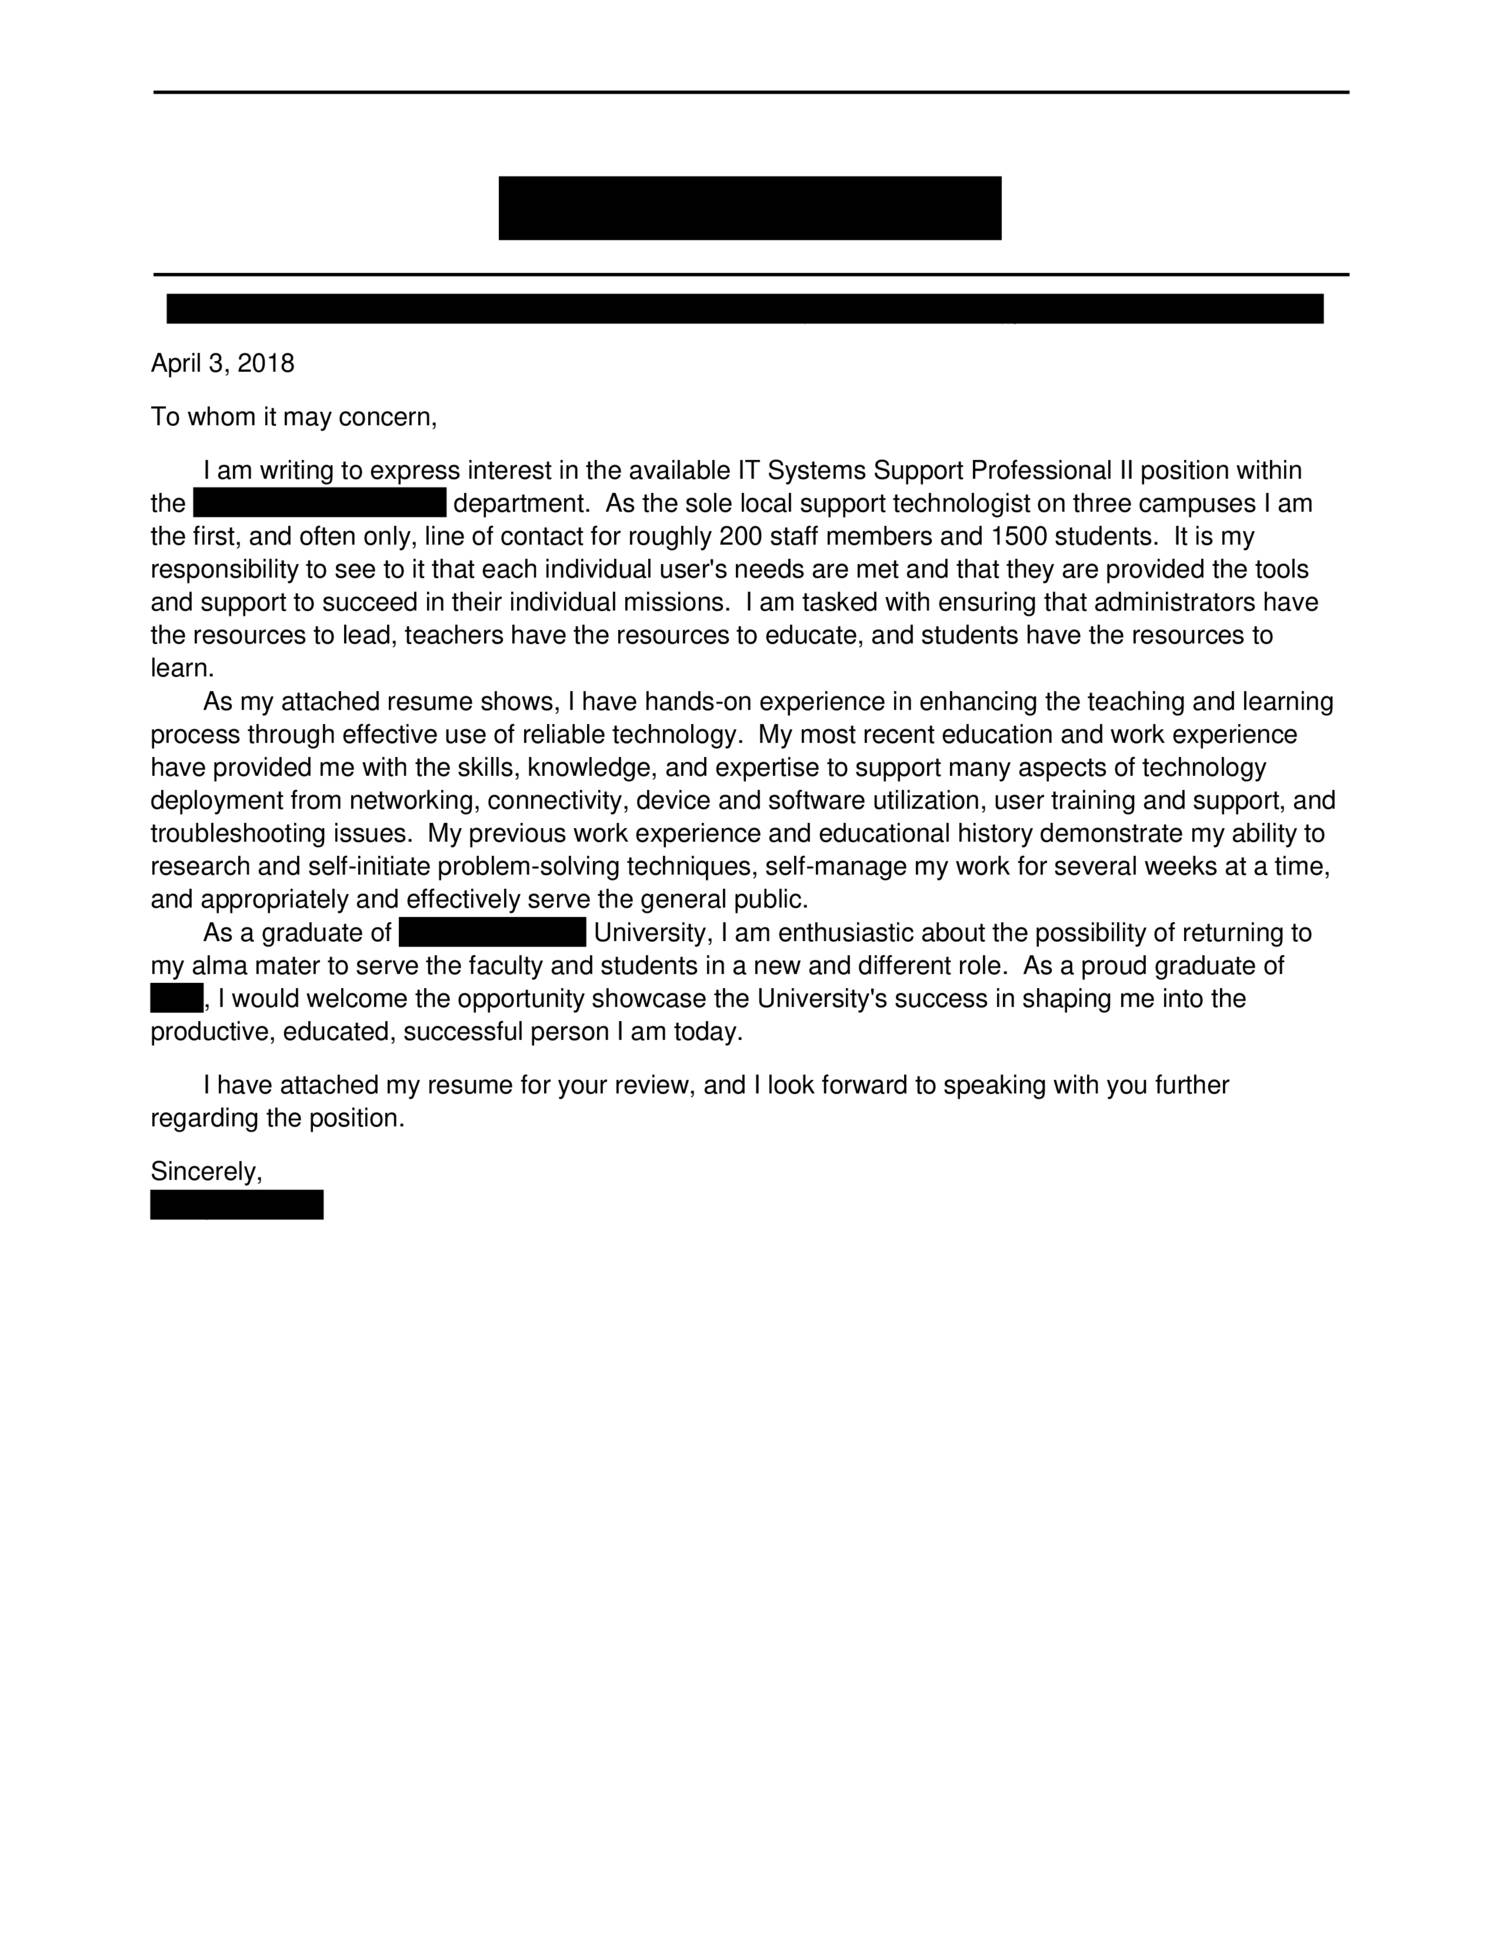 jobs cover letters reddit